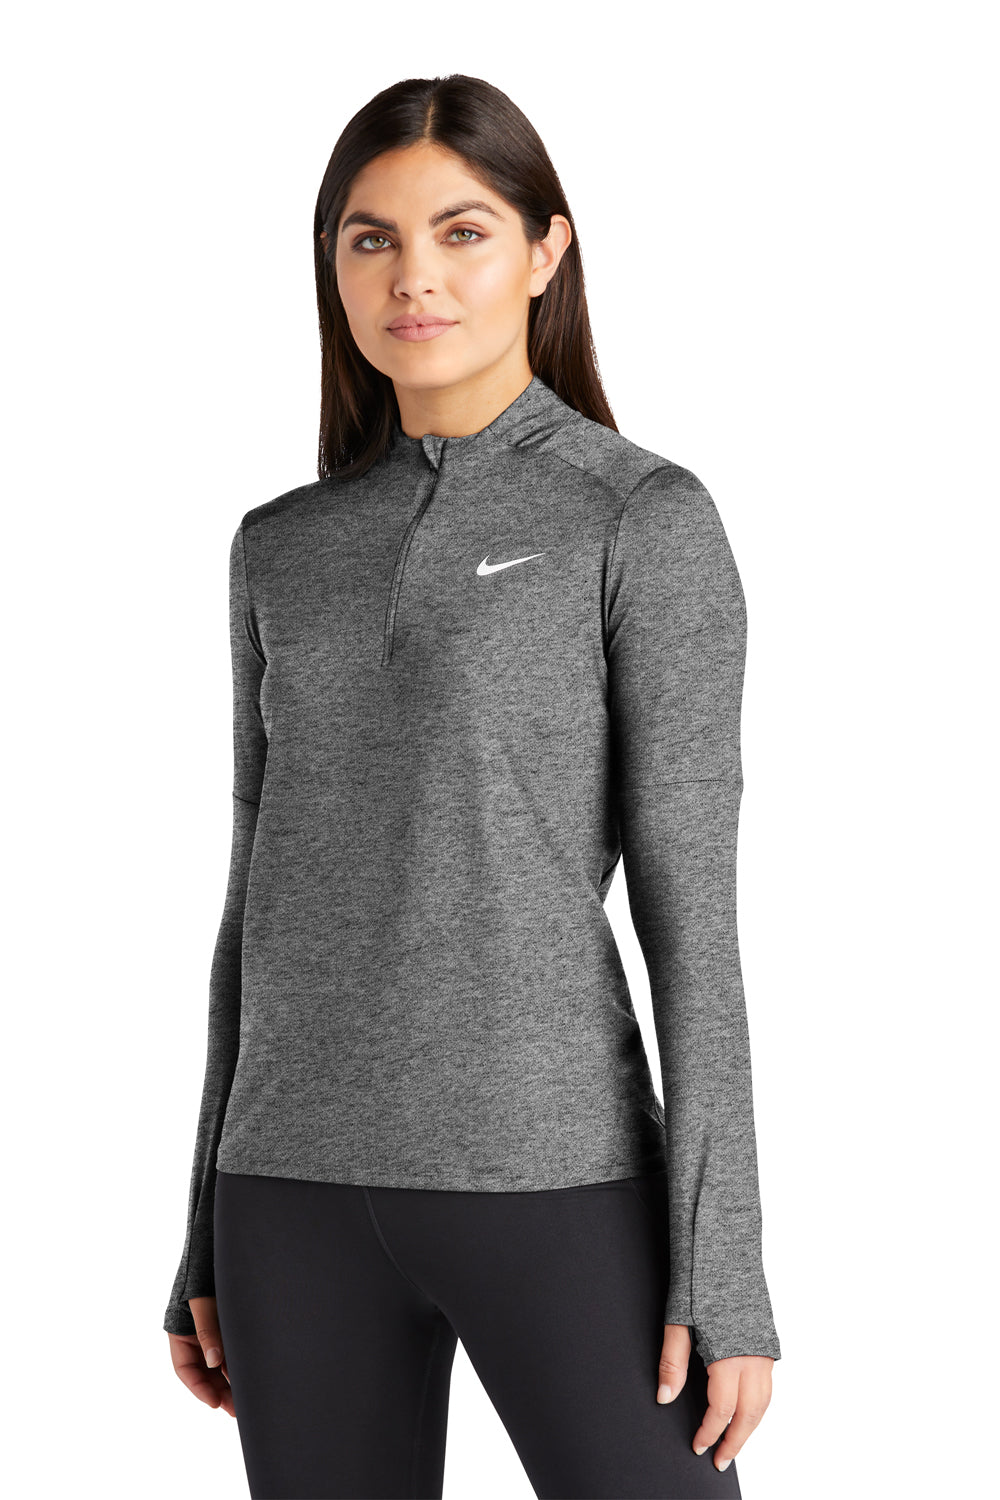 Nike NKDH4951 Womens Element Dri-Fit Moisture Wicking 1/4 Zip Sweatshirt Heather Black Model 3Q